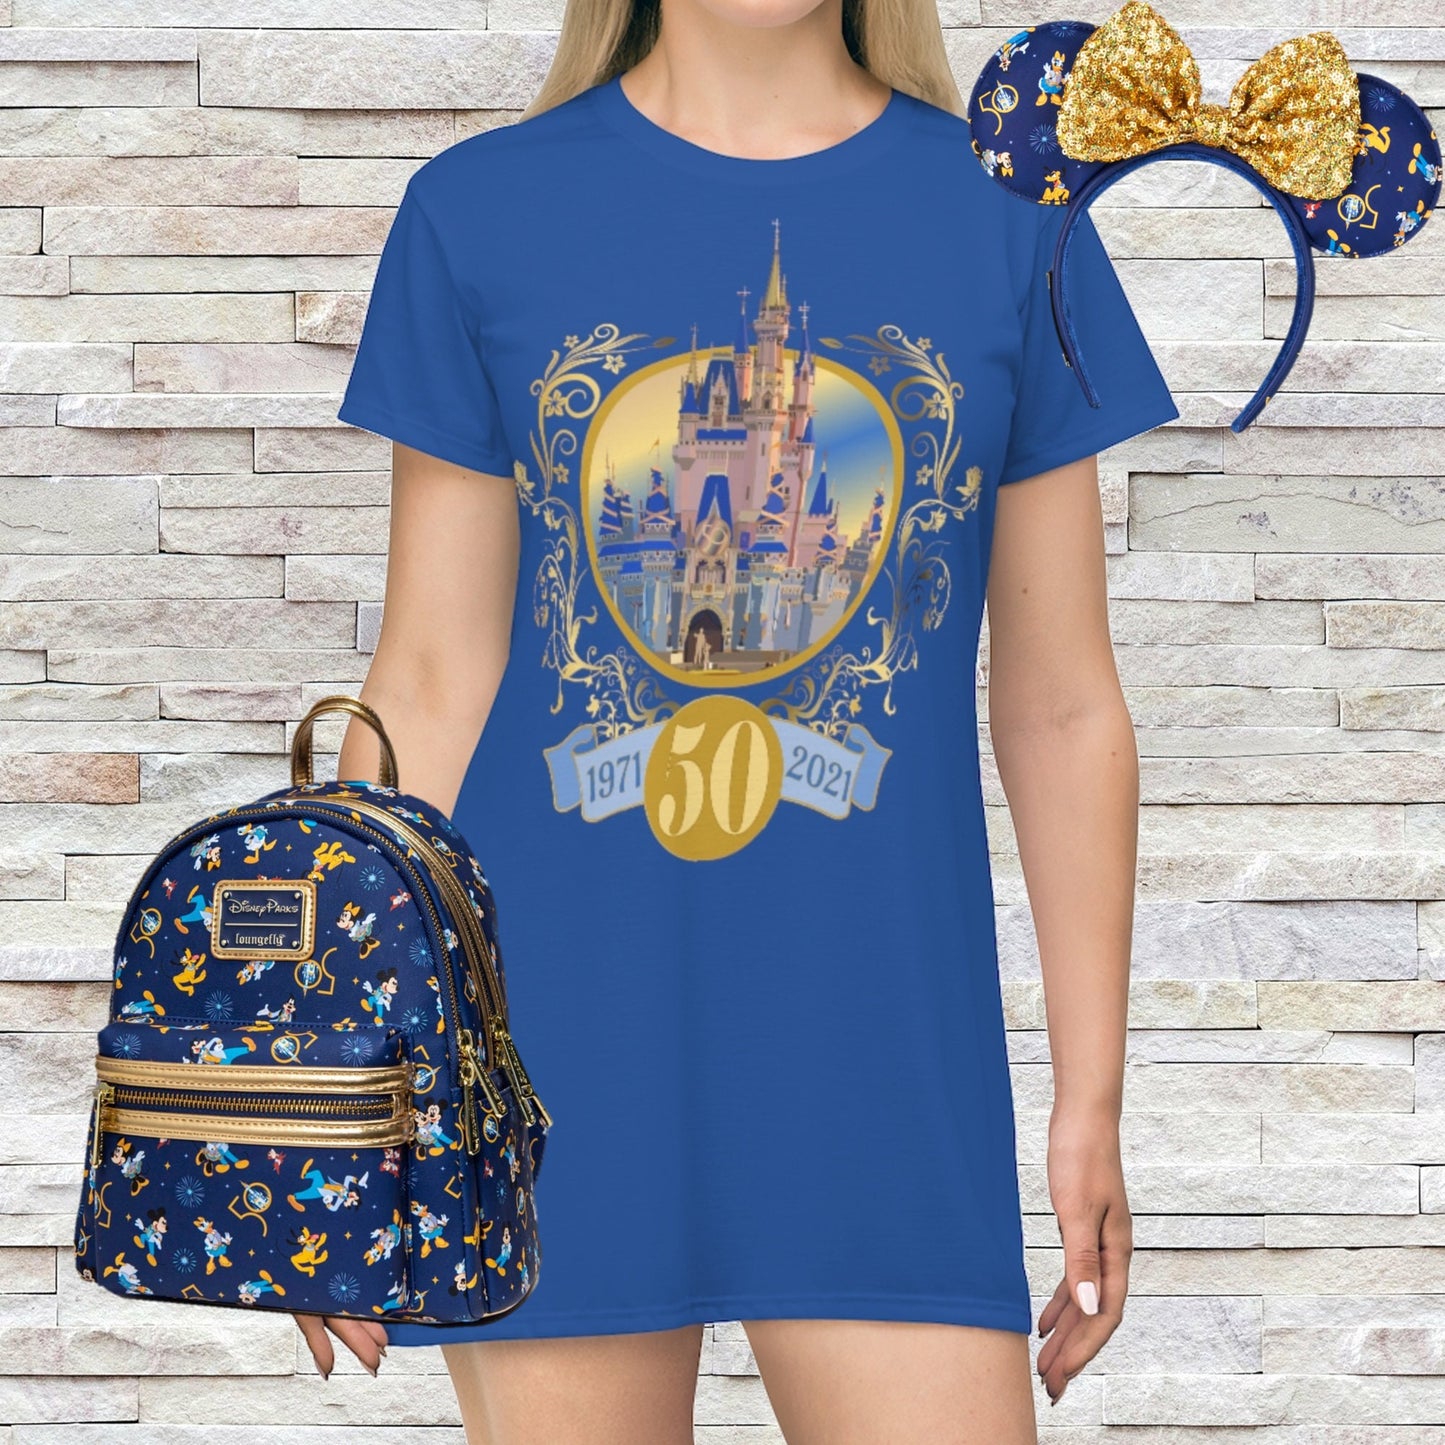 Castle 50 Anniversary T-Shirt Dress, Disney 50 Years, 1971- 2021 Dress, Cinderella Castle T-shirt Dress, Magical Celebration Dress